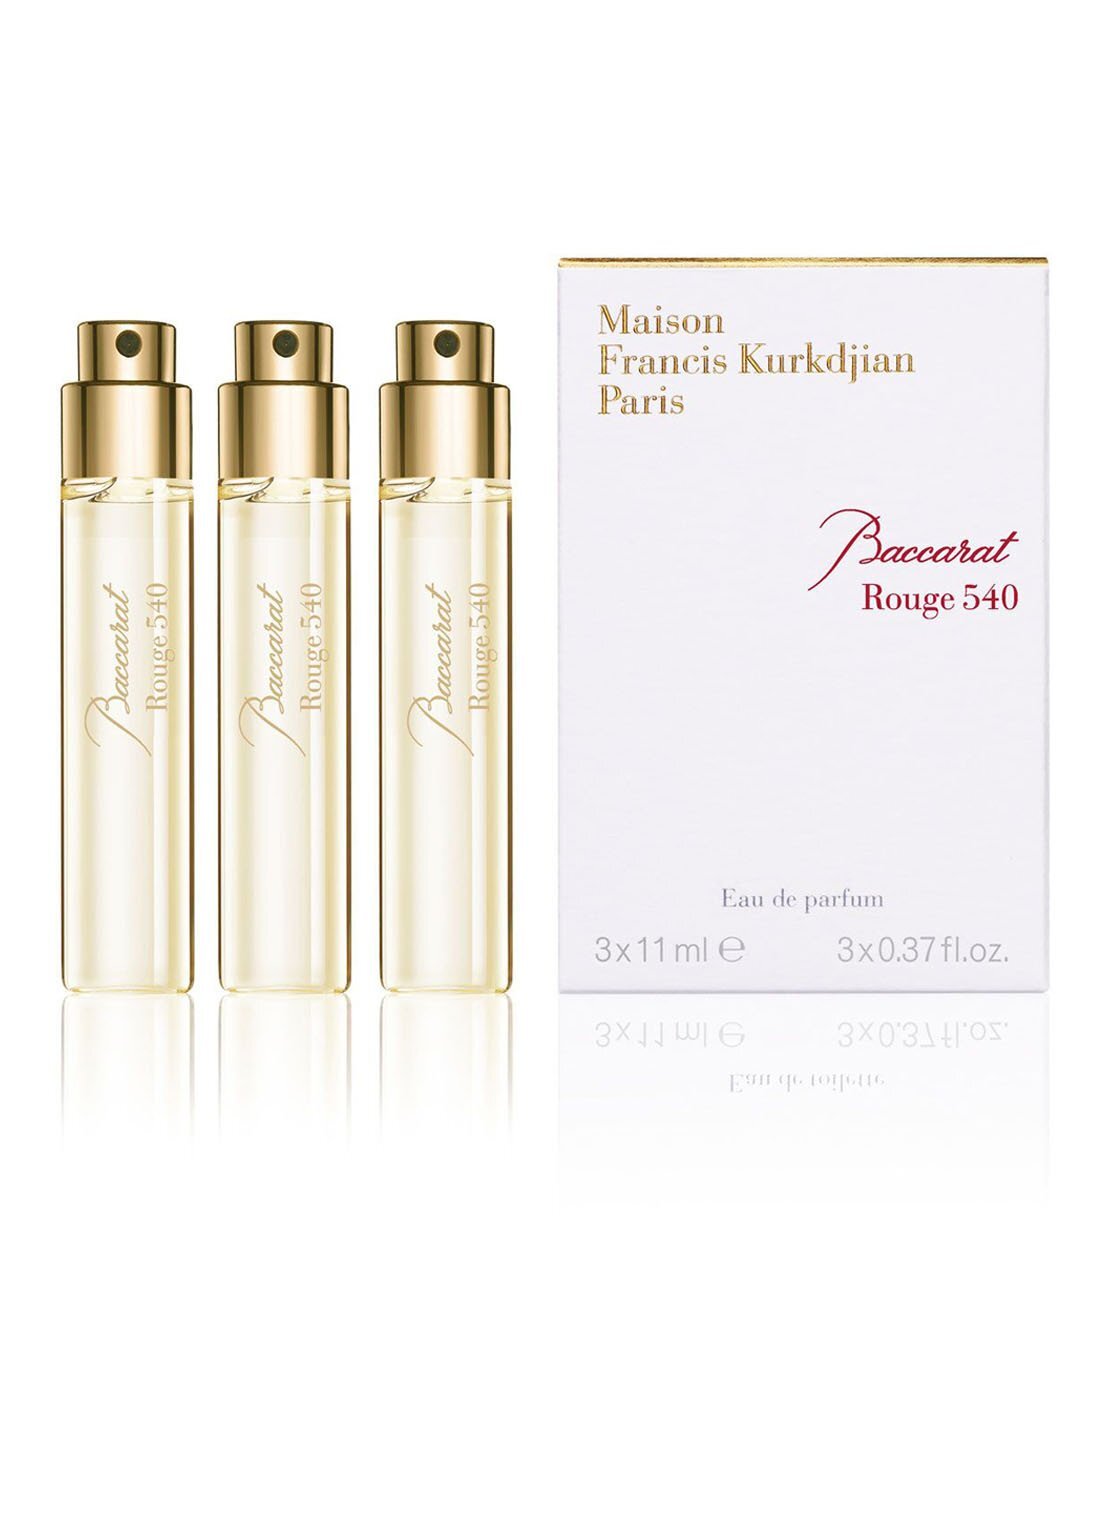 Maison Francis Kurkdjian Baccarat Rouge 540 Eau de Parfum - navulling set van 3